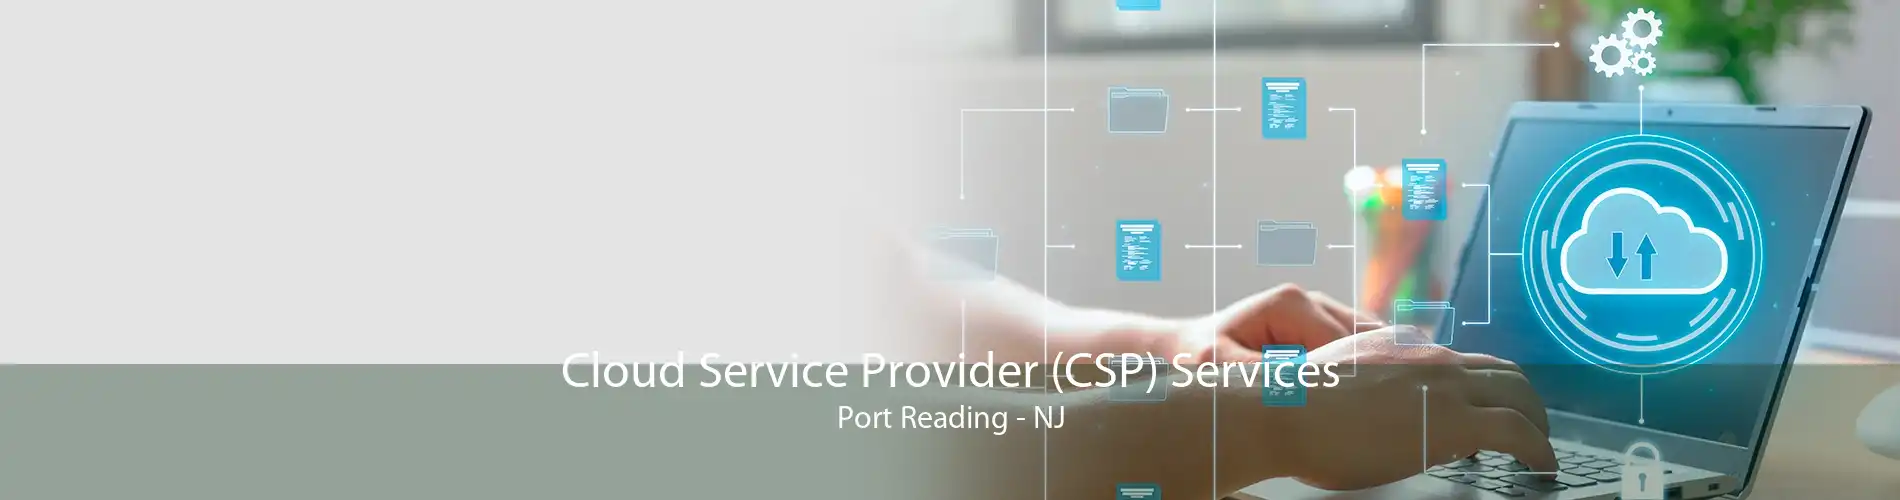 Cloud Service Provider (CSP) Services Port Reading - NJ